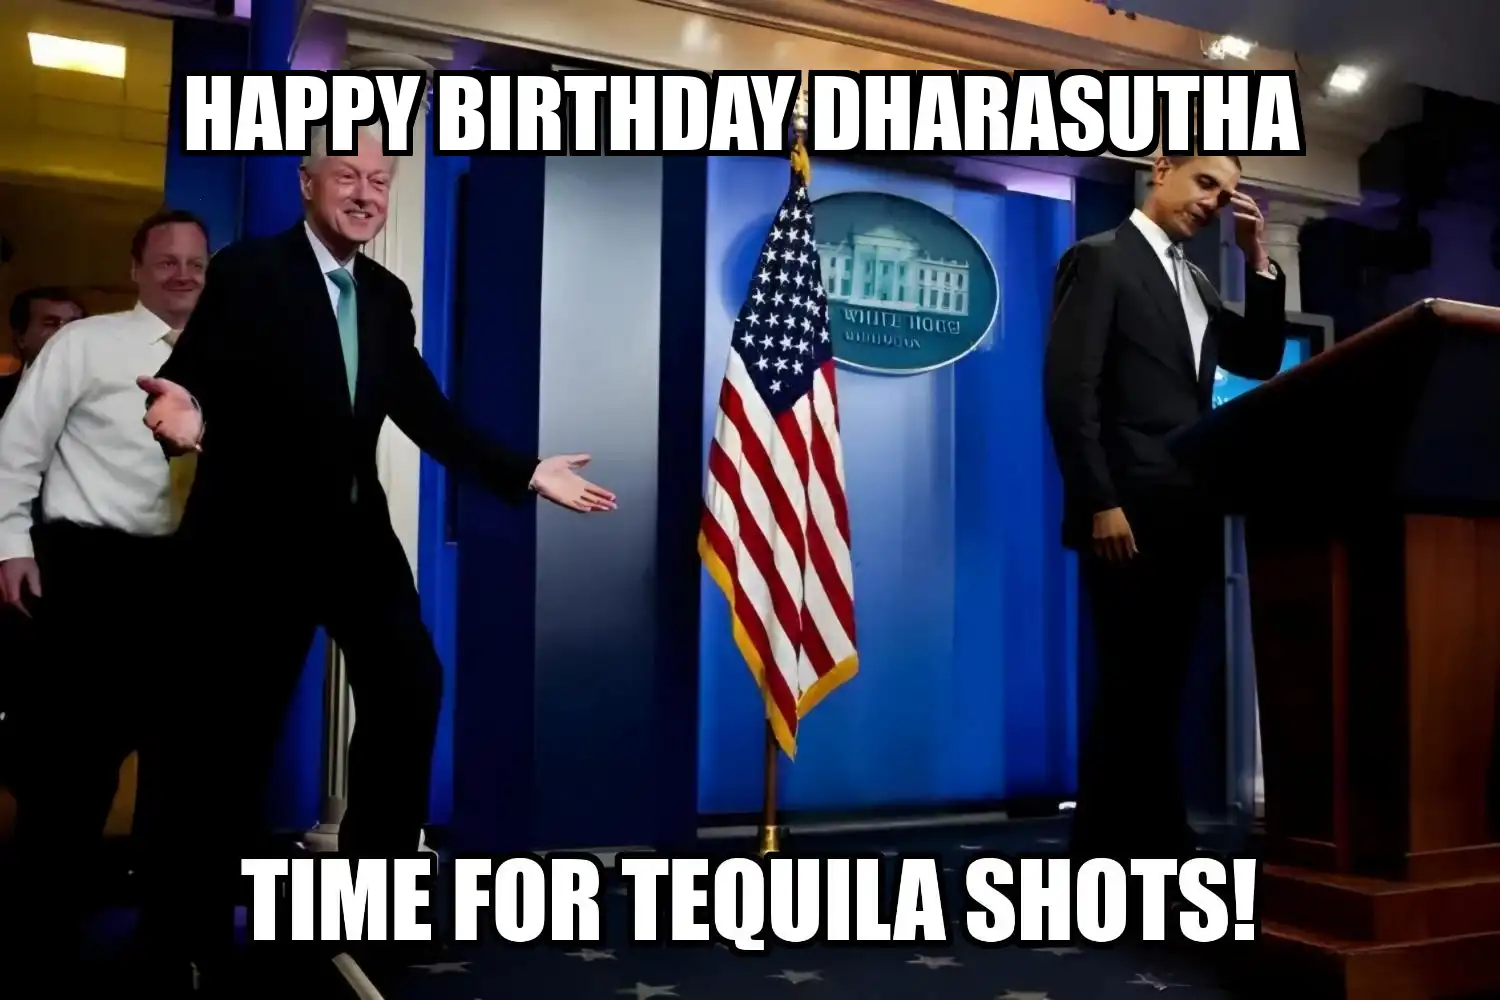 Happy Birthday Dharasutha Time For Tequila Shots Memes